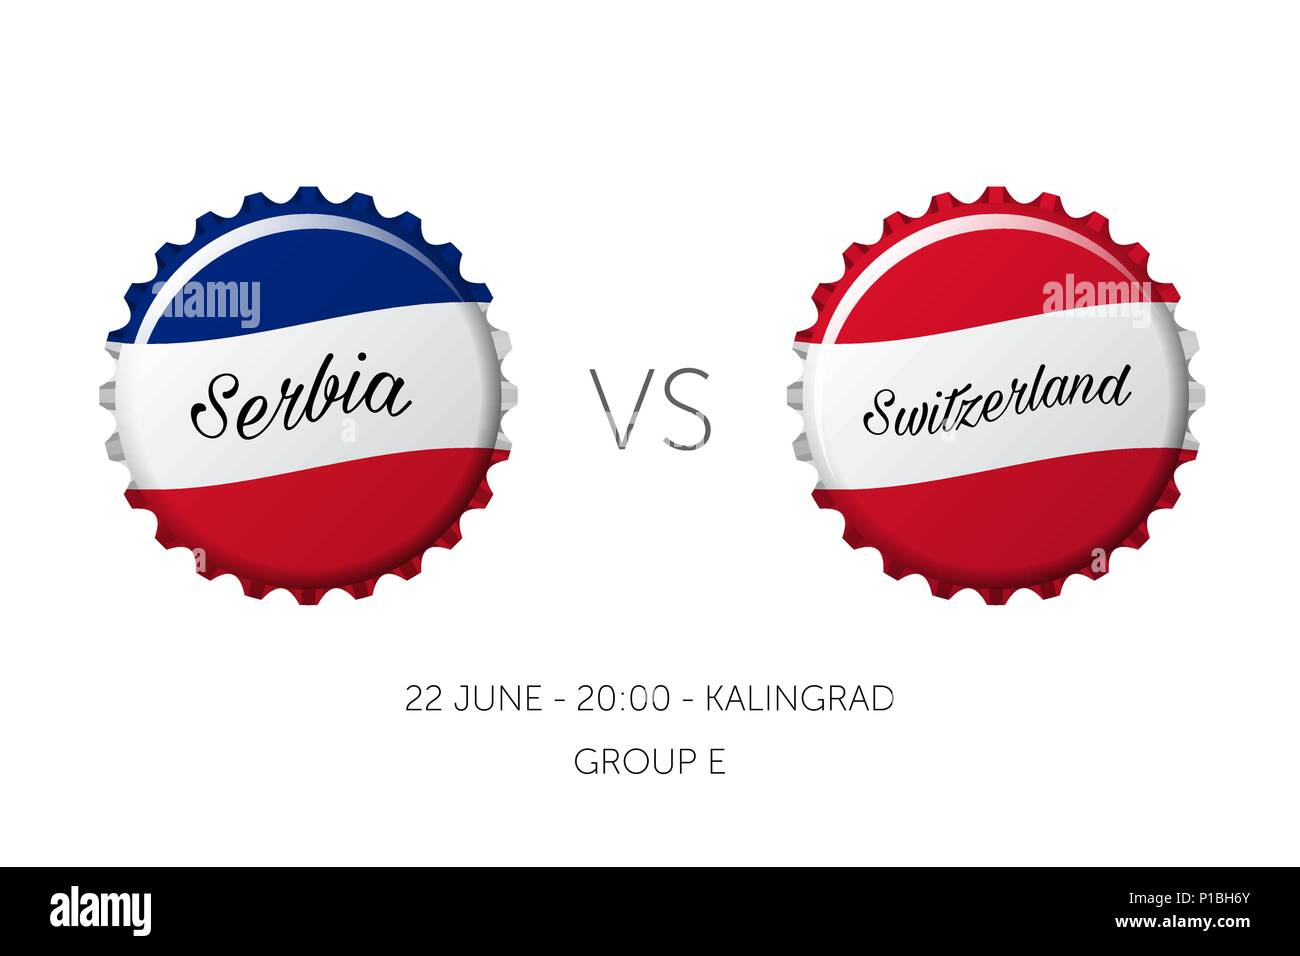 Soccer championship - Serbia VS Switzerland - 22 June Stock Vector